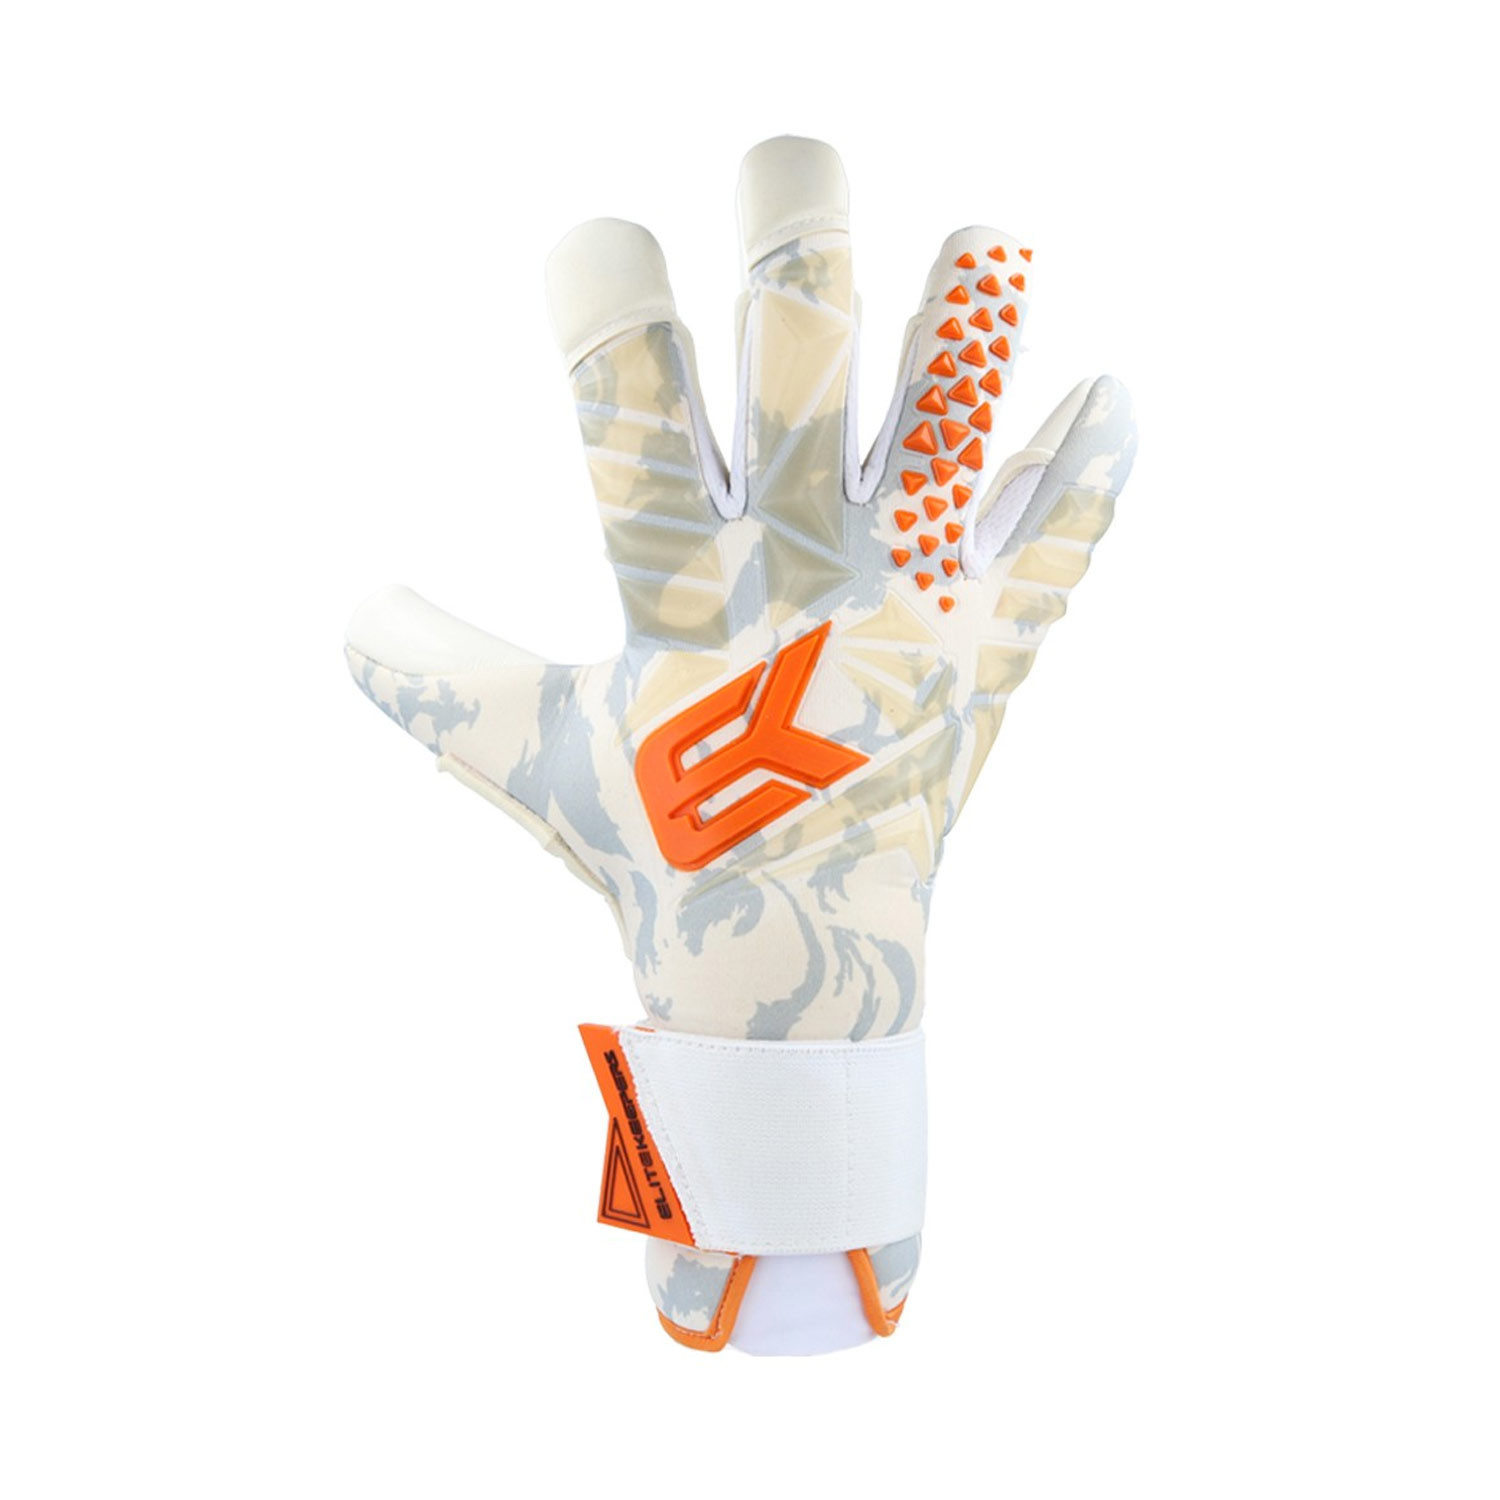 Comprar guantes portero Elite Sport - Goalkeeping ® Elitekeepers